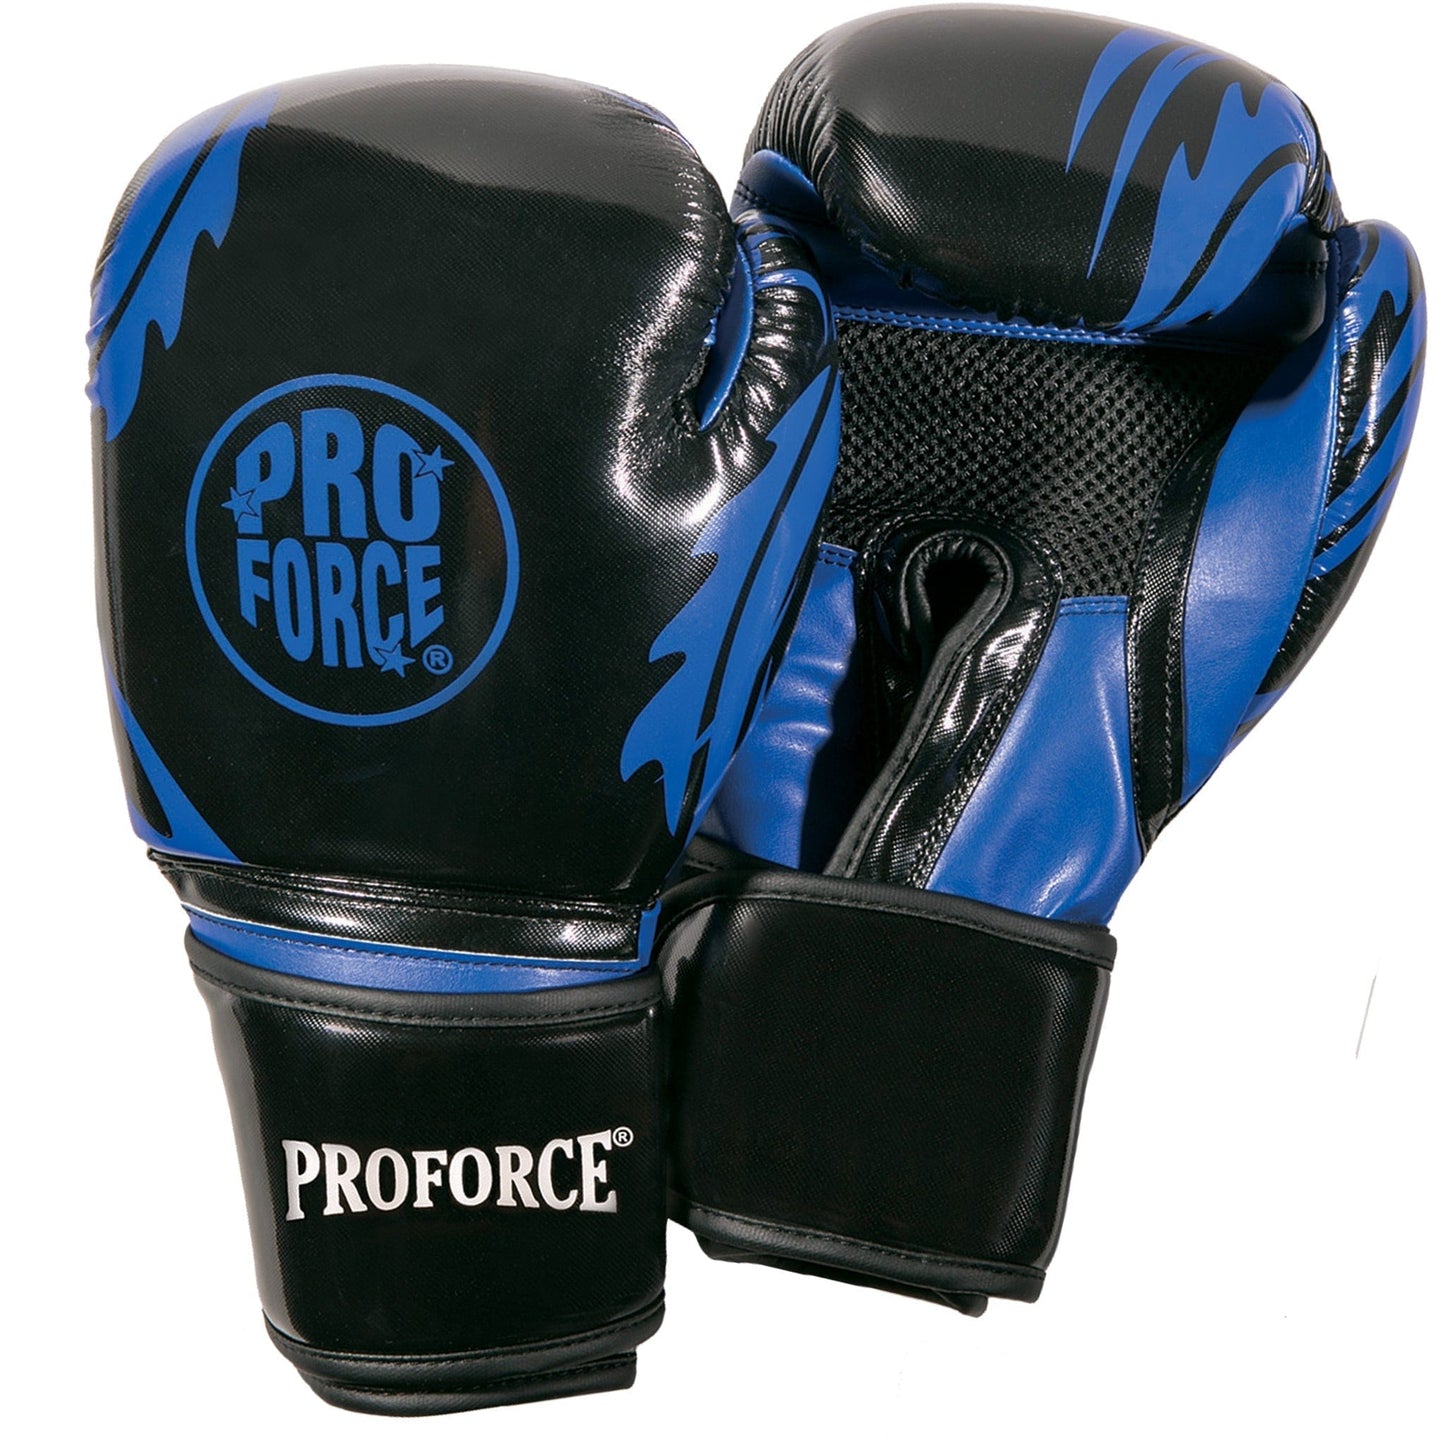 Proforce Boxing black/blue ProForce Combat Boxing Training Glove - 12 oz